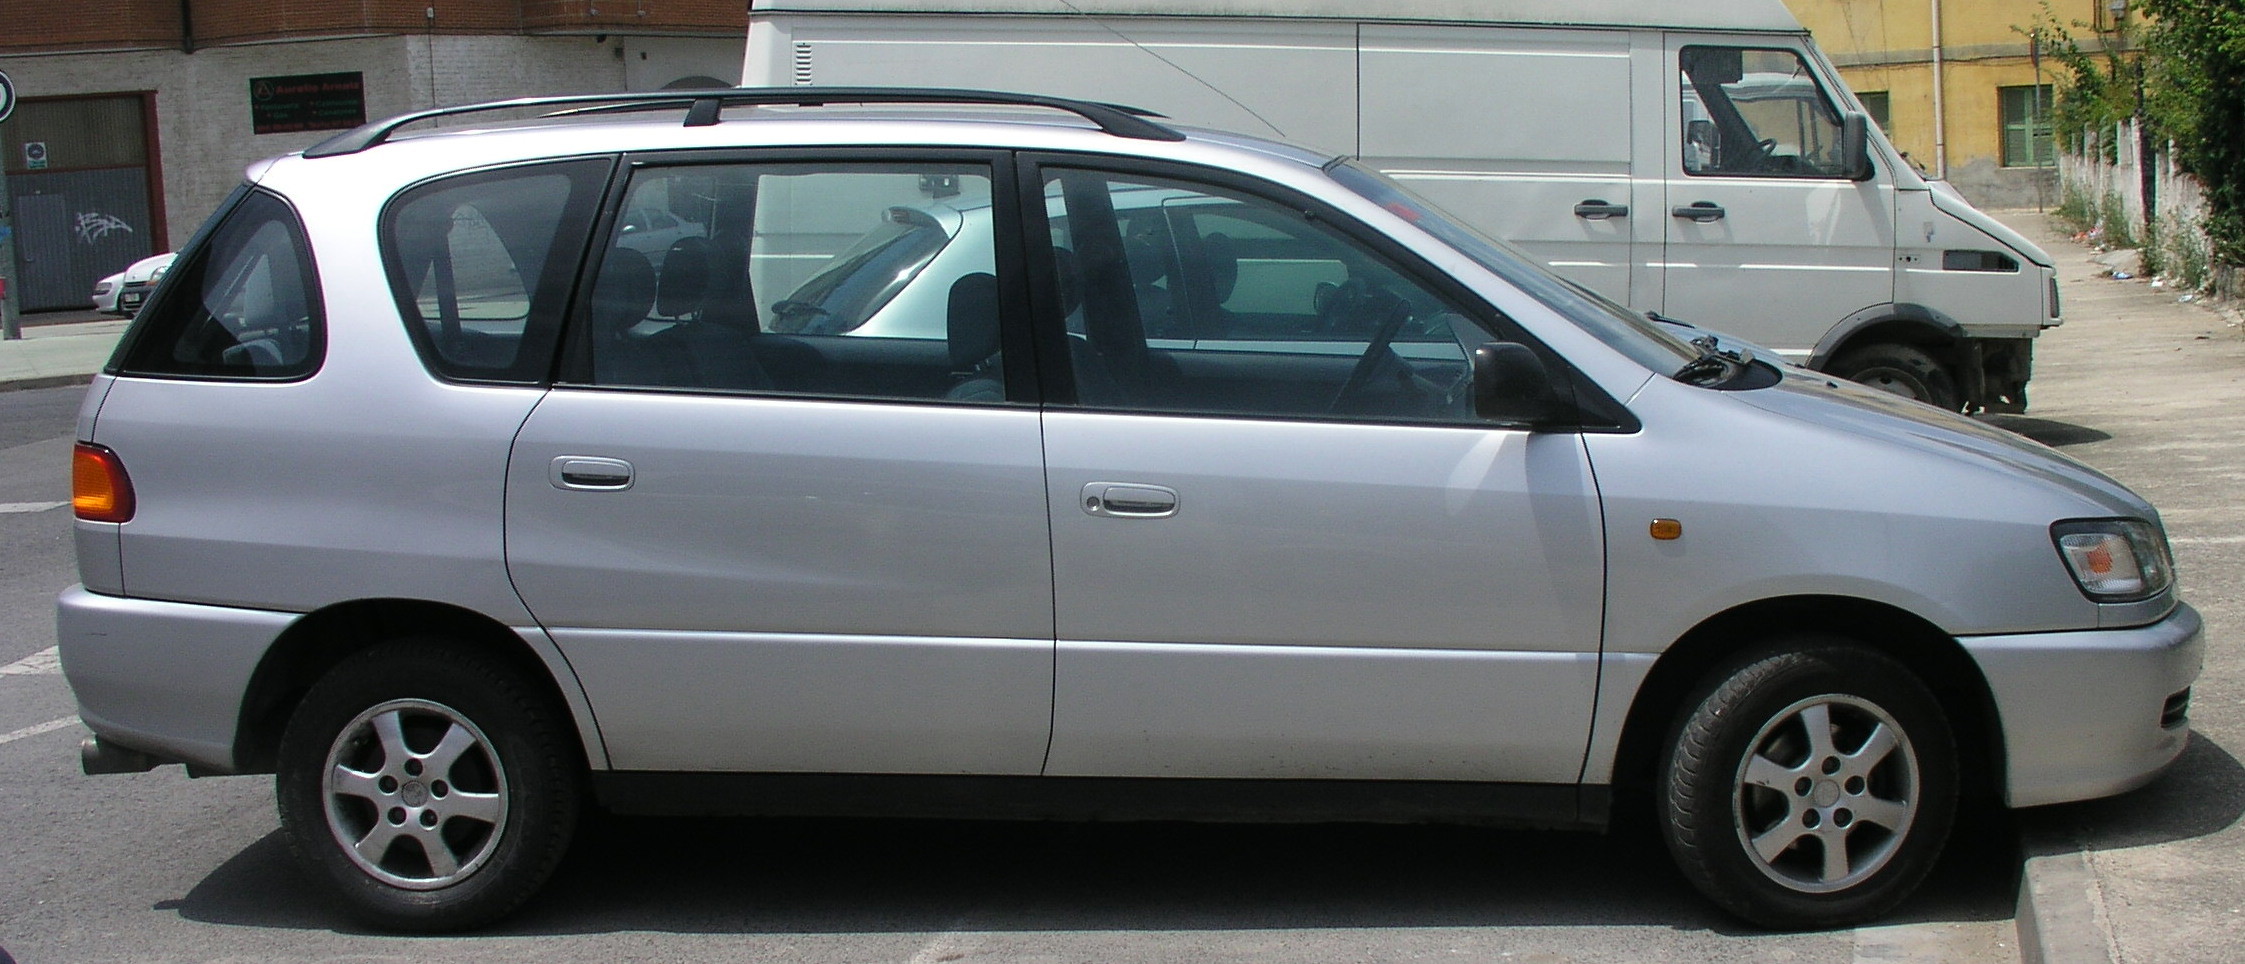 Toyota Picnic 1999 Photo - 1